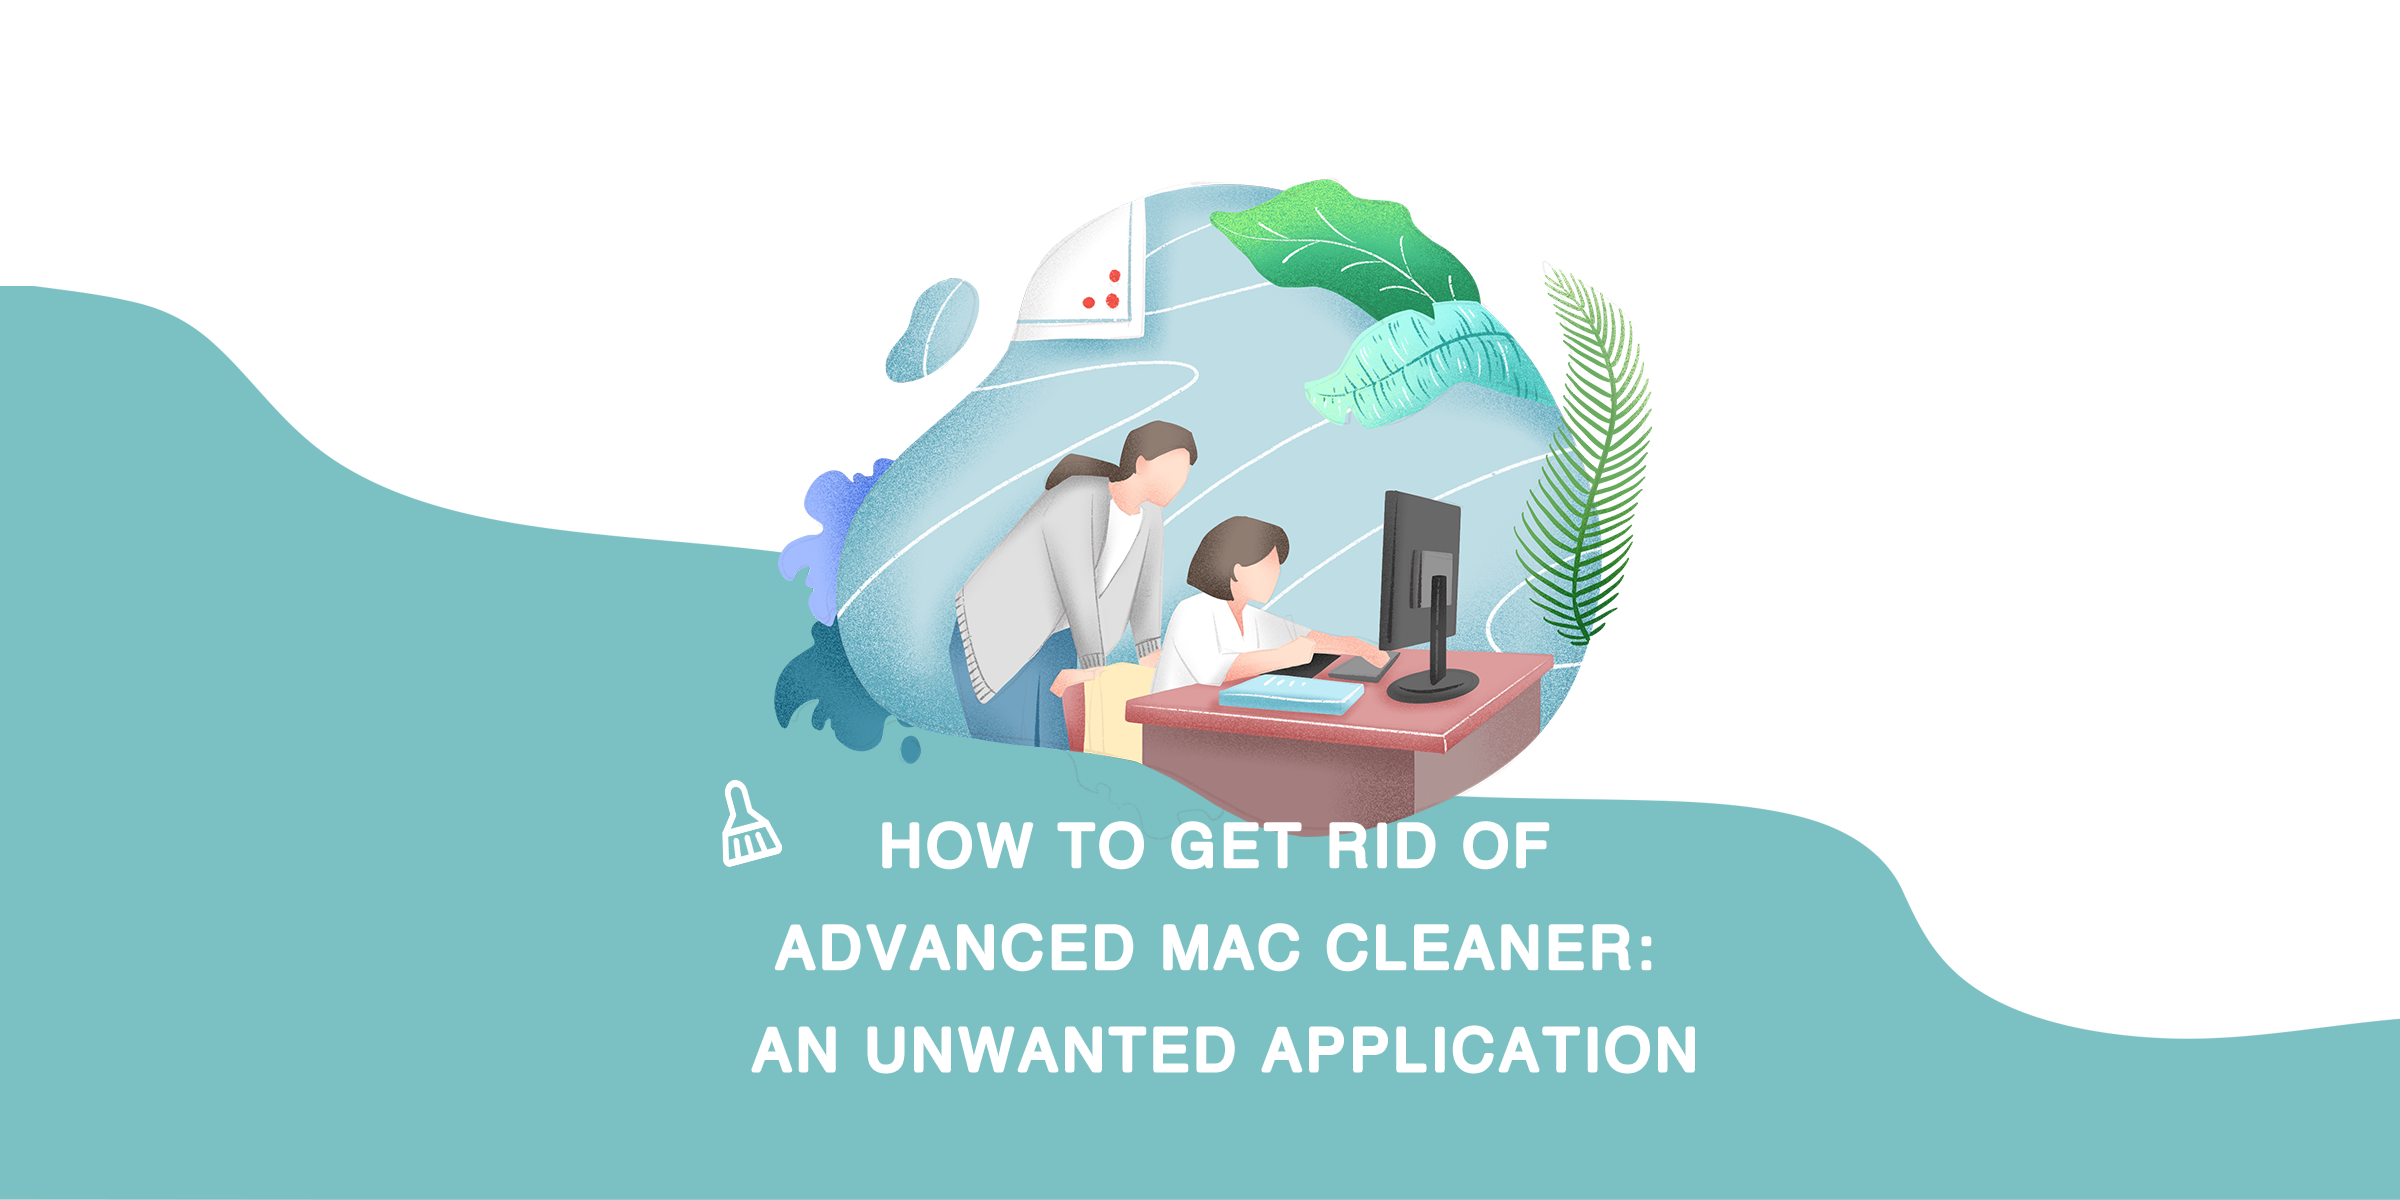 you get rid of advanced mac cleaner